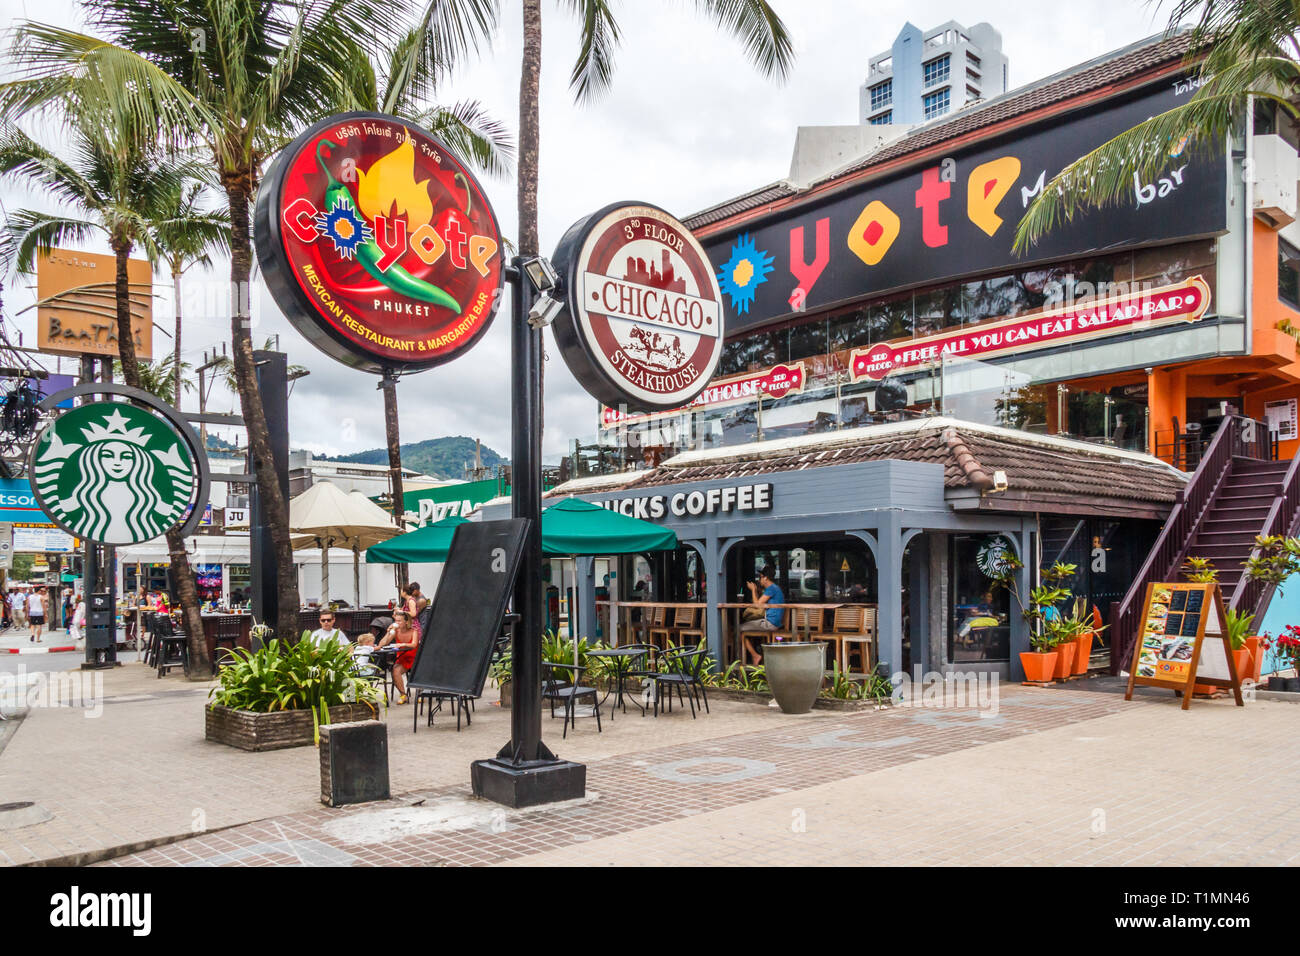 Patong Beach, Thailand - 6. Januar 2017: Cafés und Restaurants an der Strandpromenade. Phuket ist ein bekannter Urlaubsort. Stockfoto